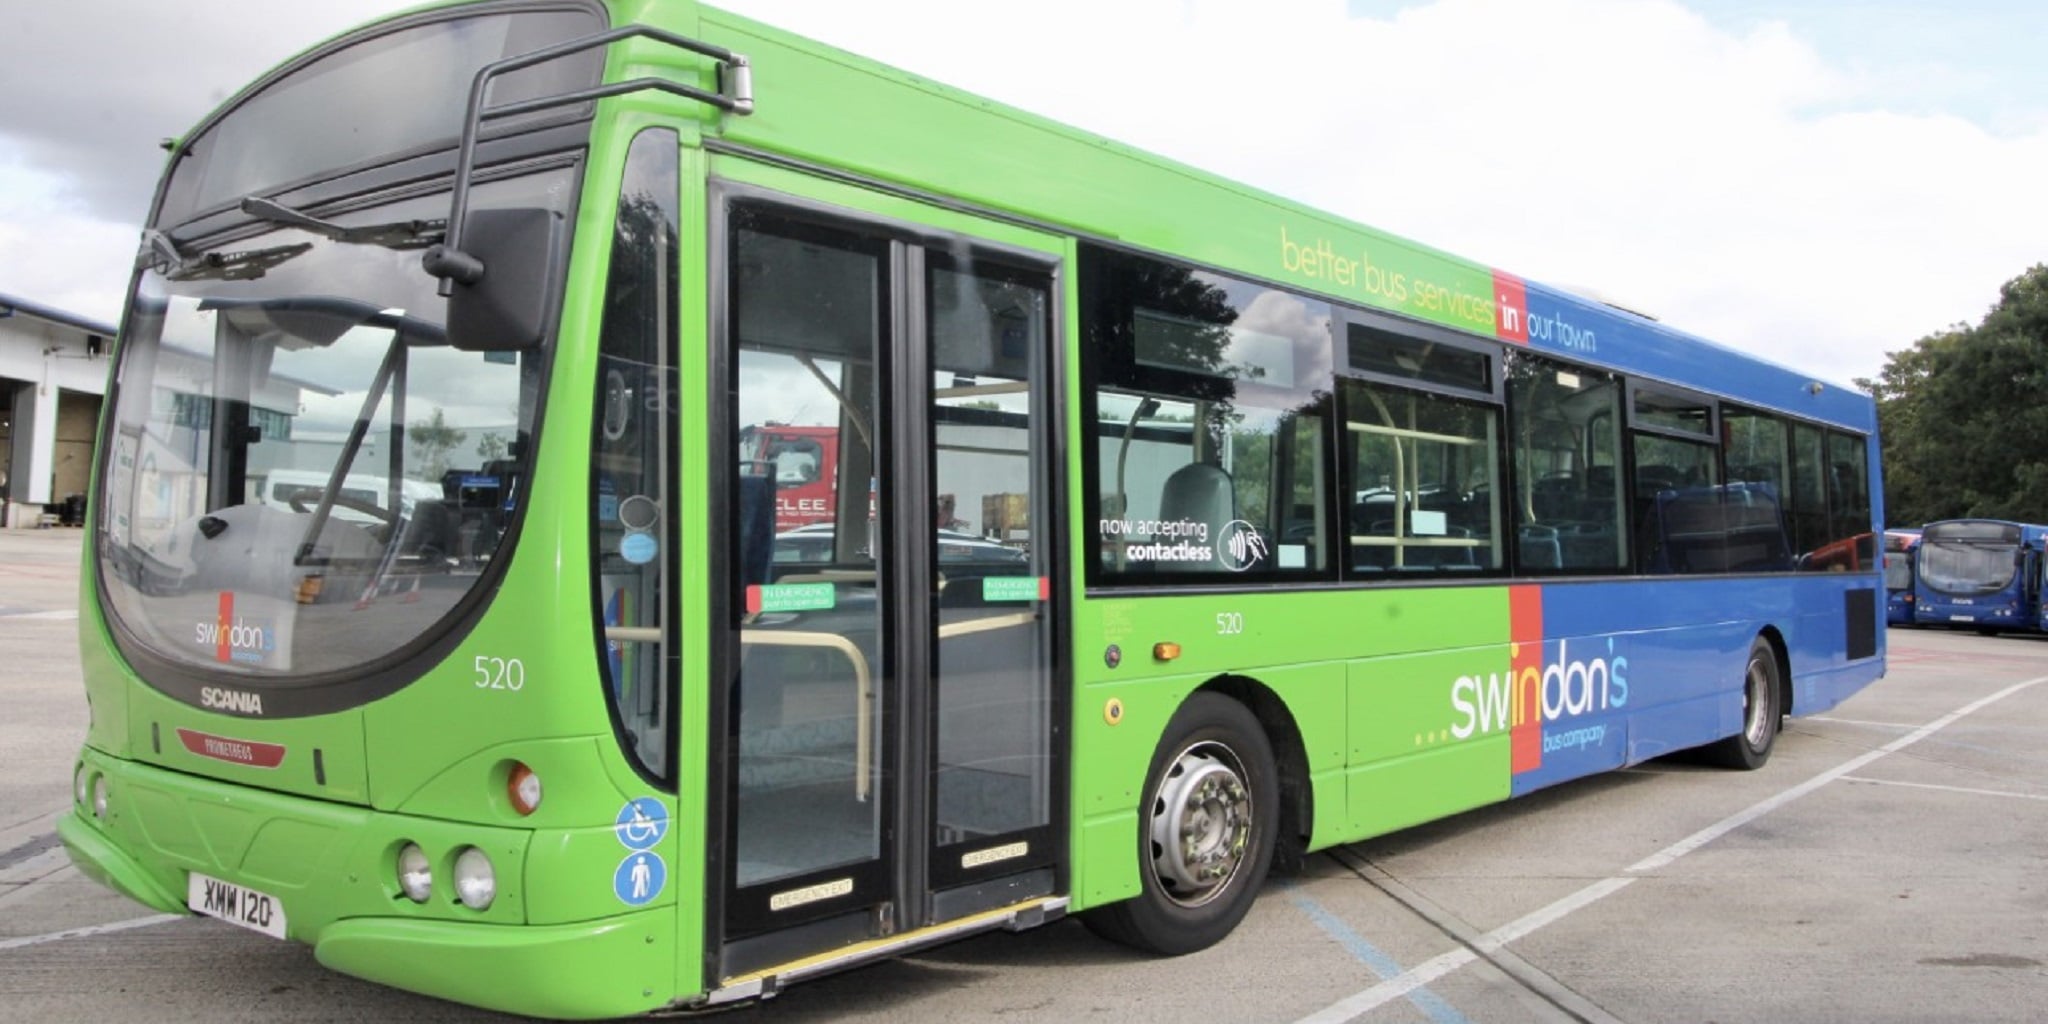 Swindon bus